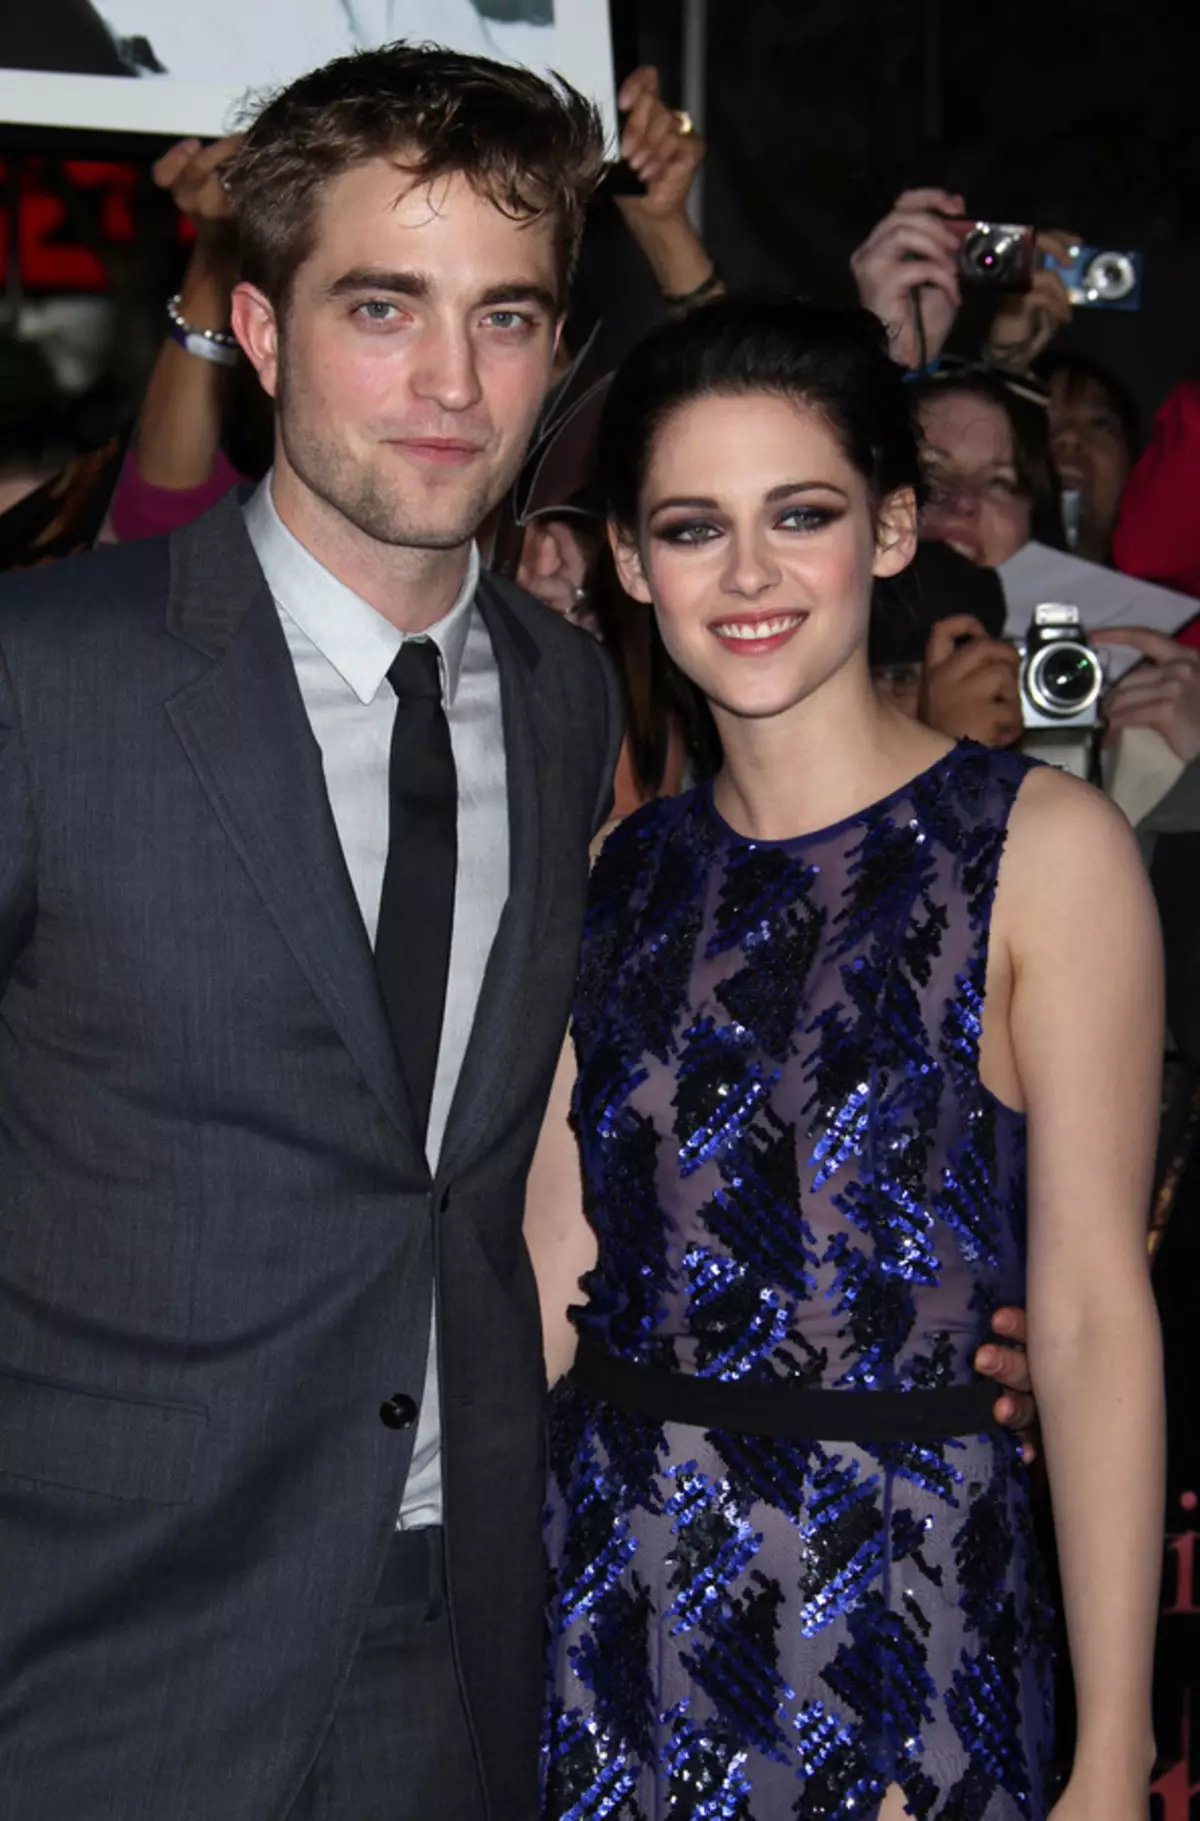 Robert Pattinson le Kristen Stewart a ke ke a arola ntja